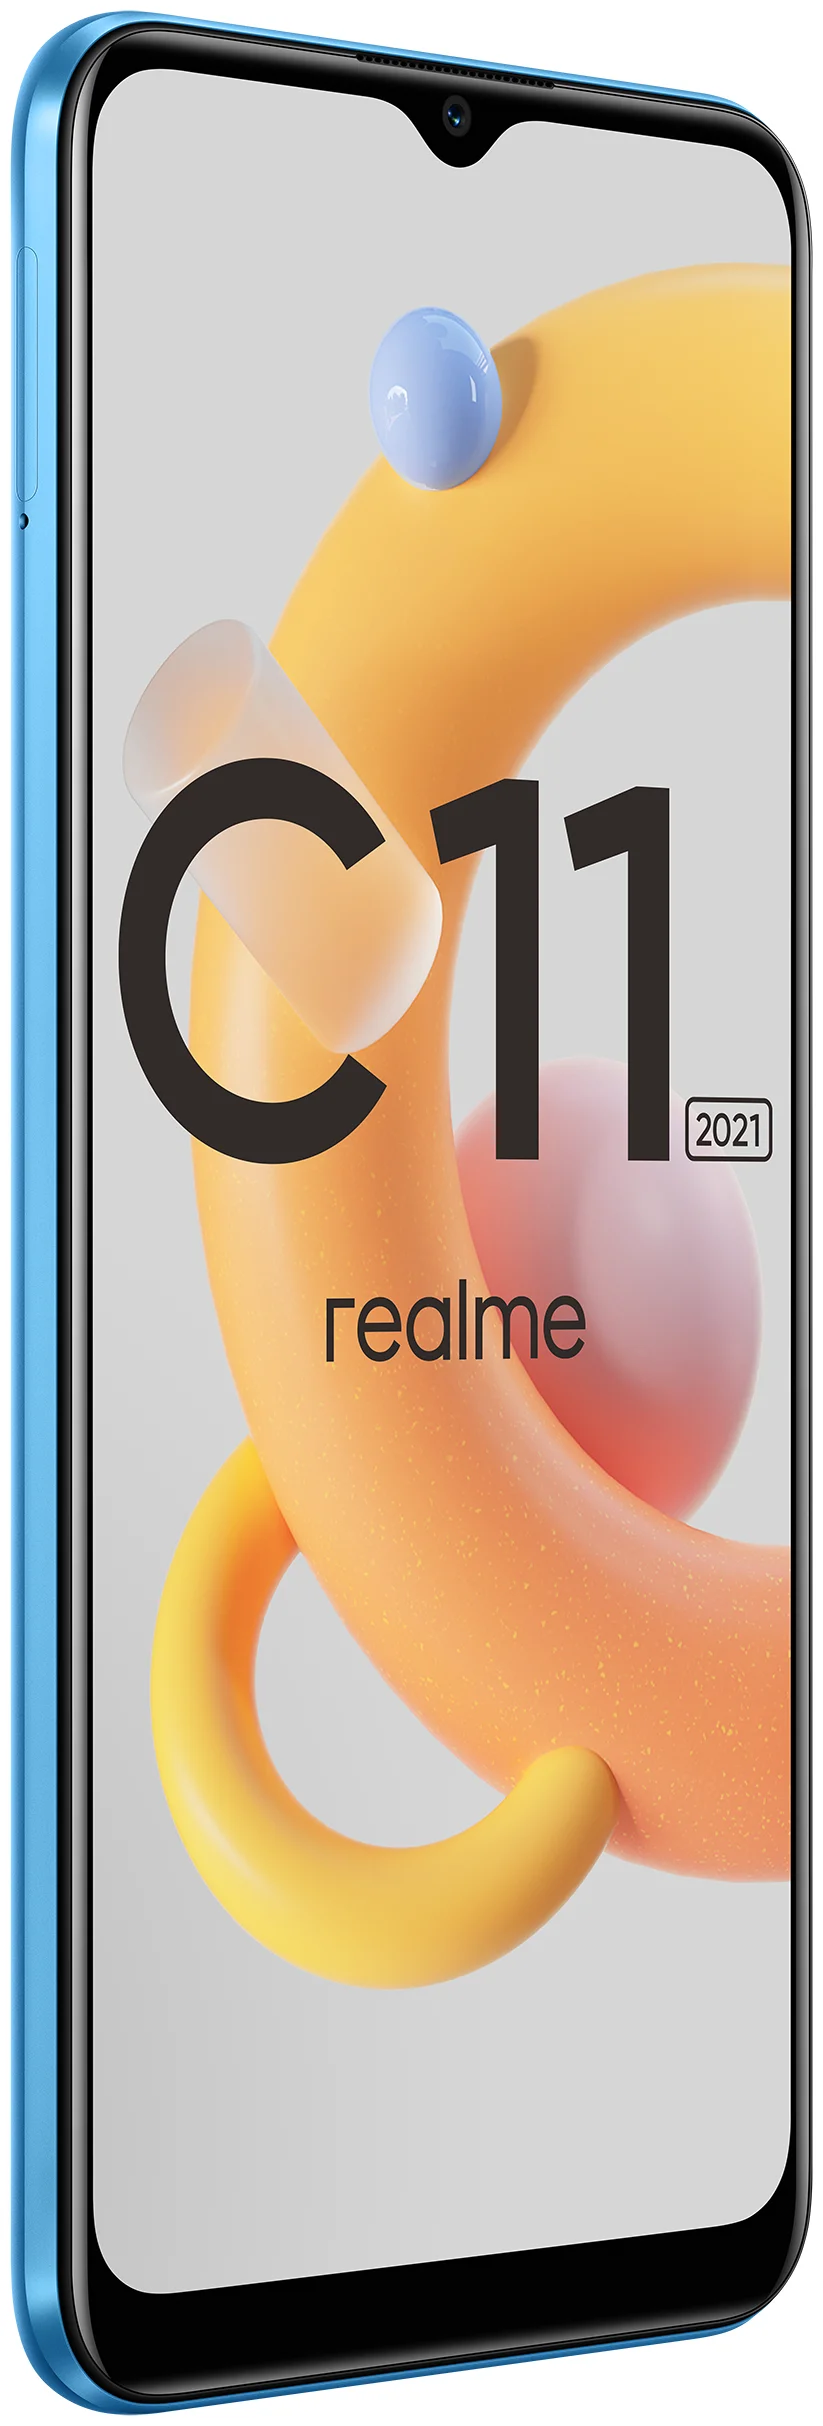 Realme C11 2021 - камера: 8 МП